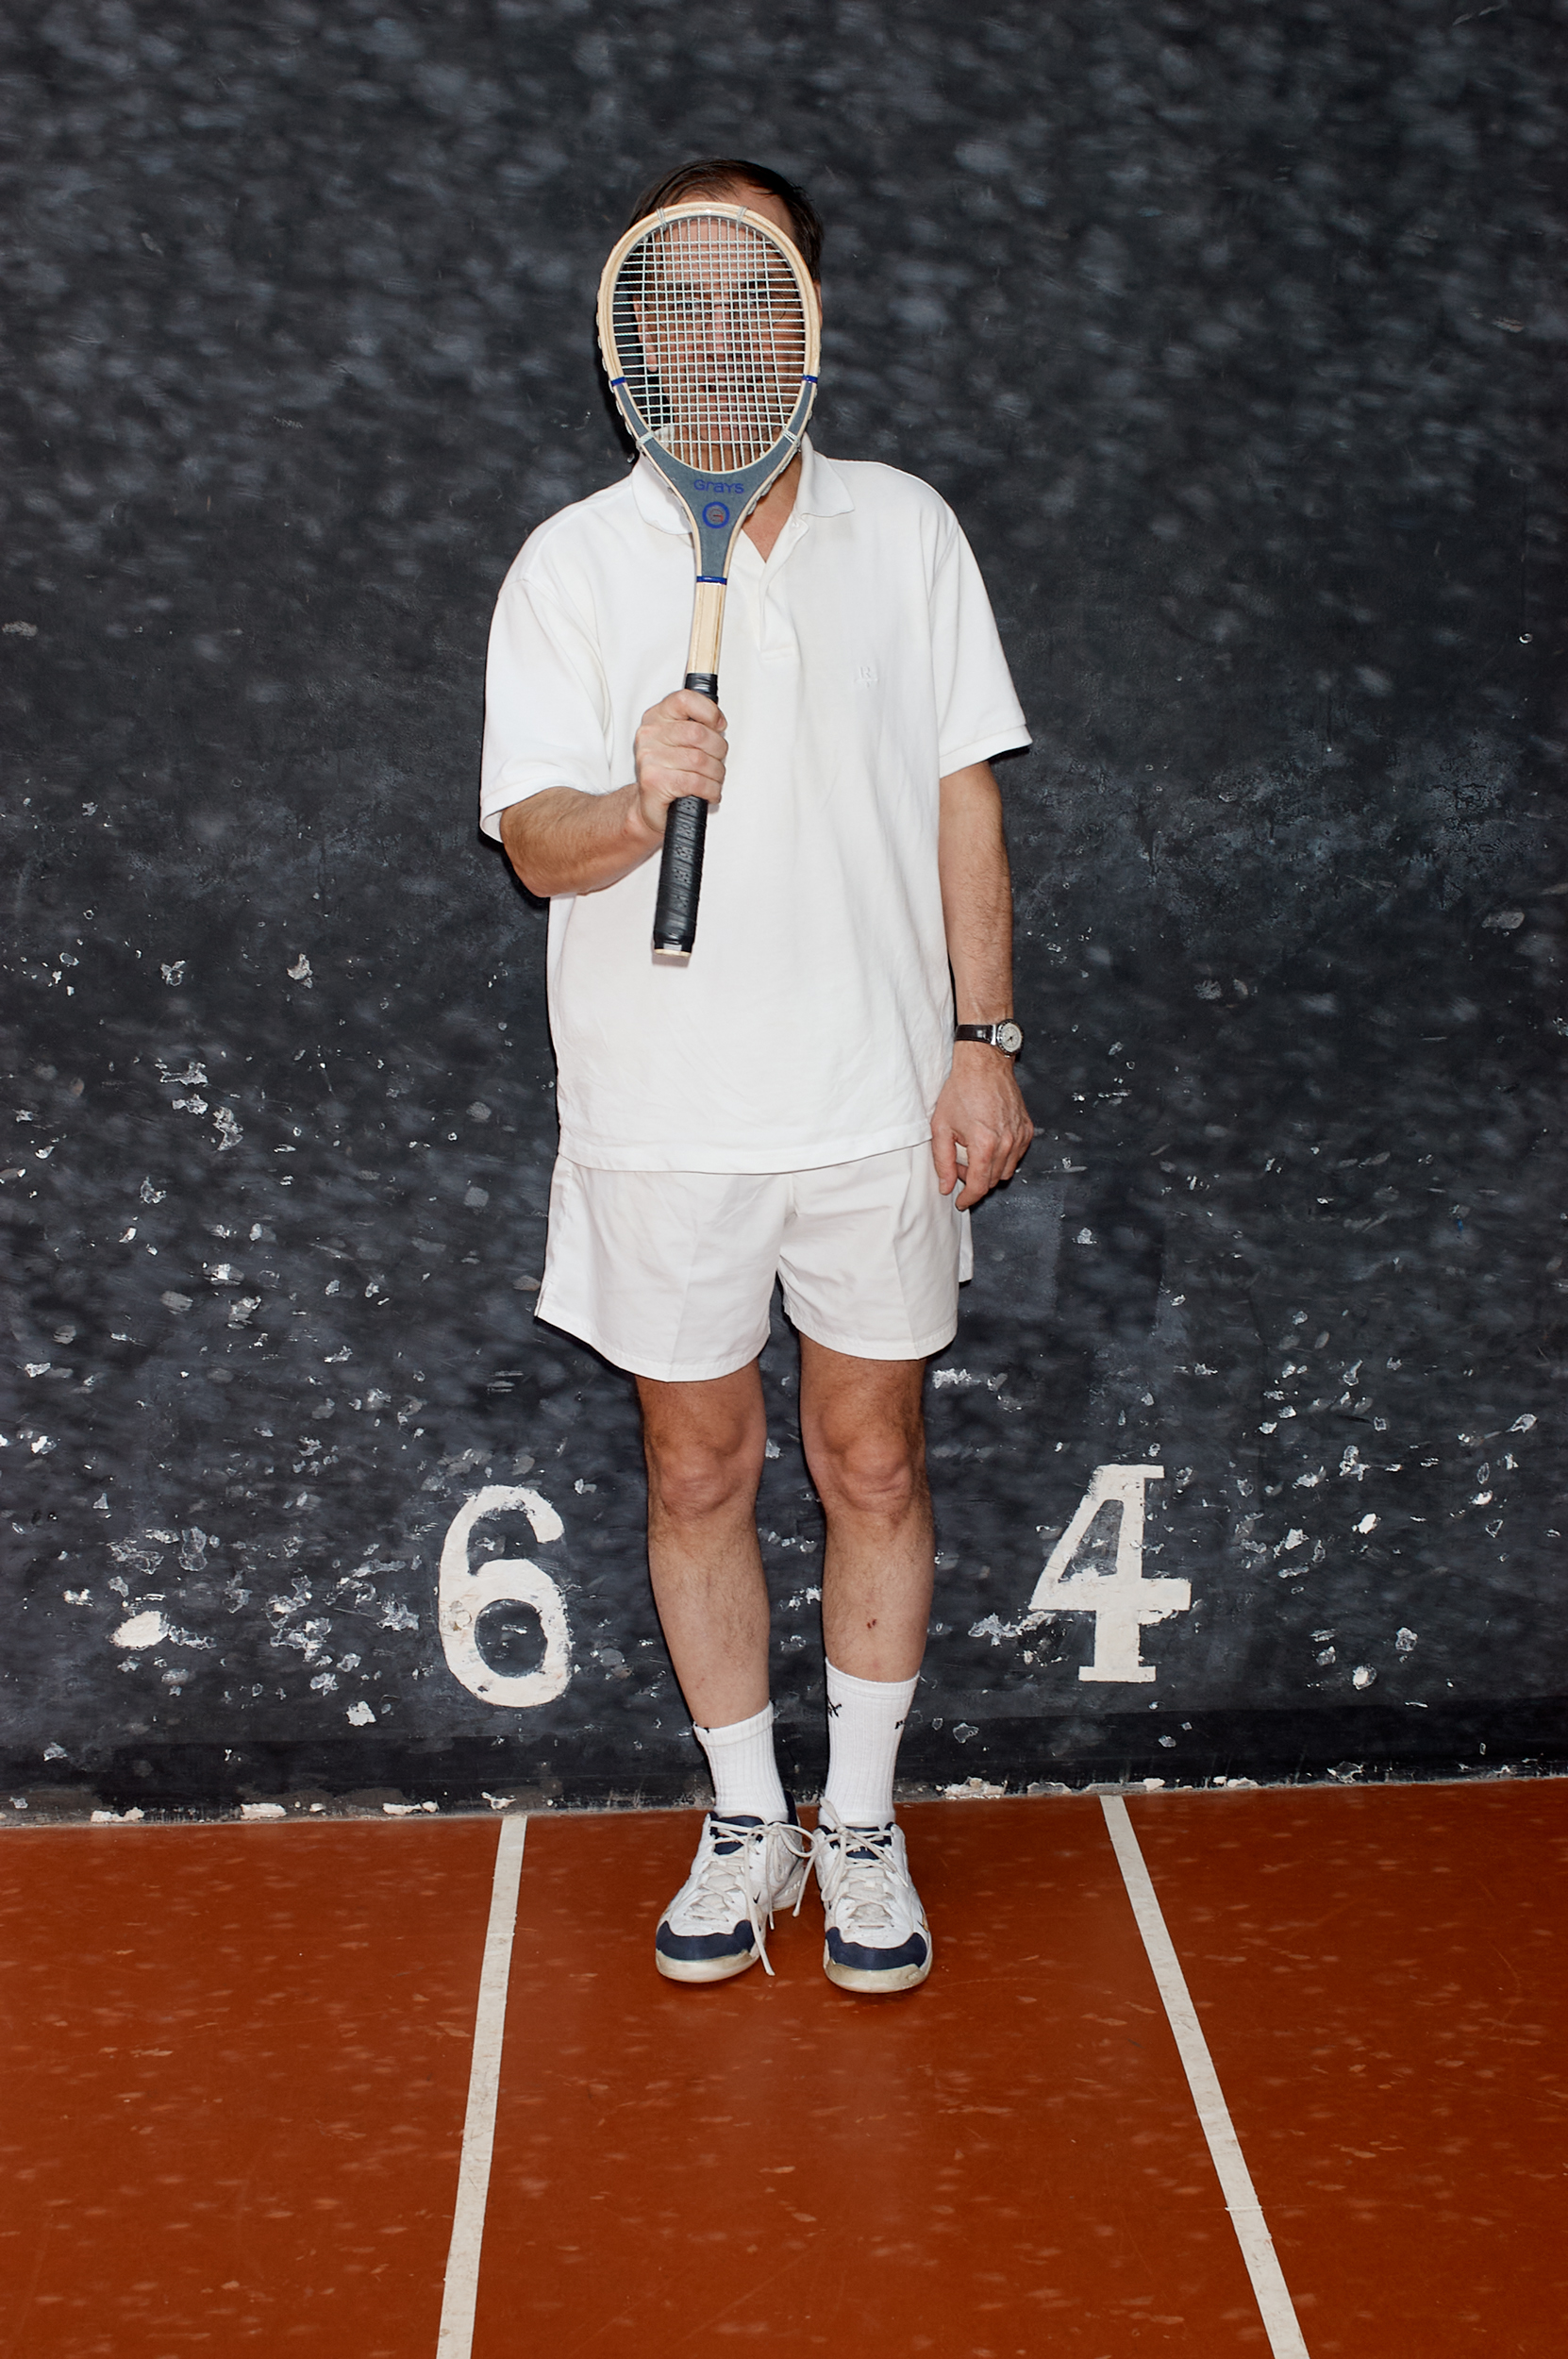 jeu de paume; real tennis; portrait, gil kressmann